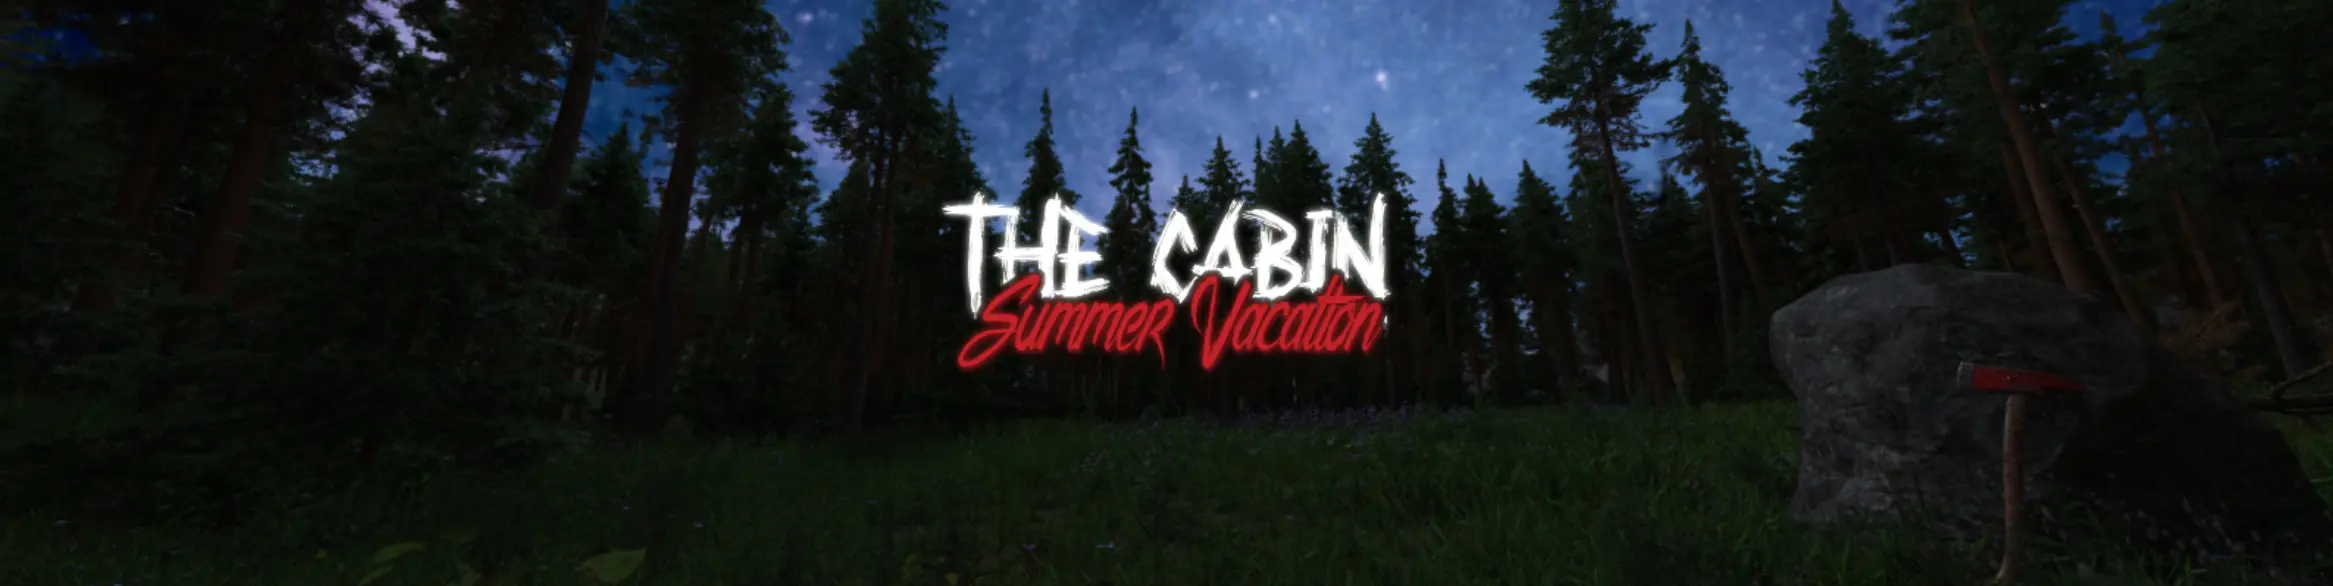 The Cabin - Summer Vacation main image